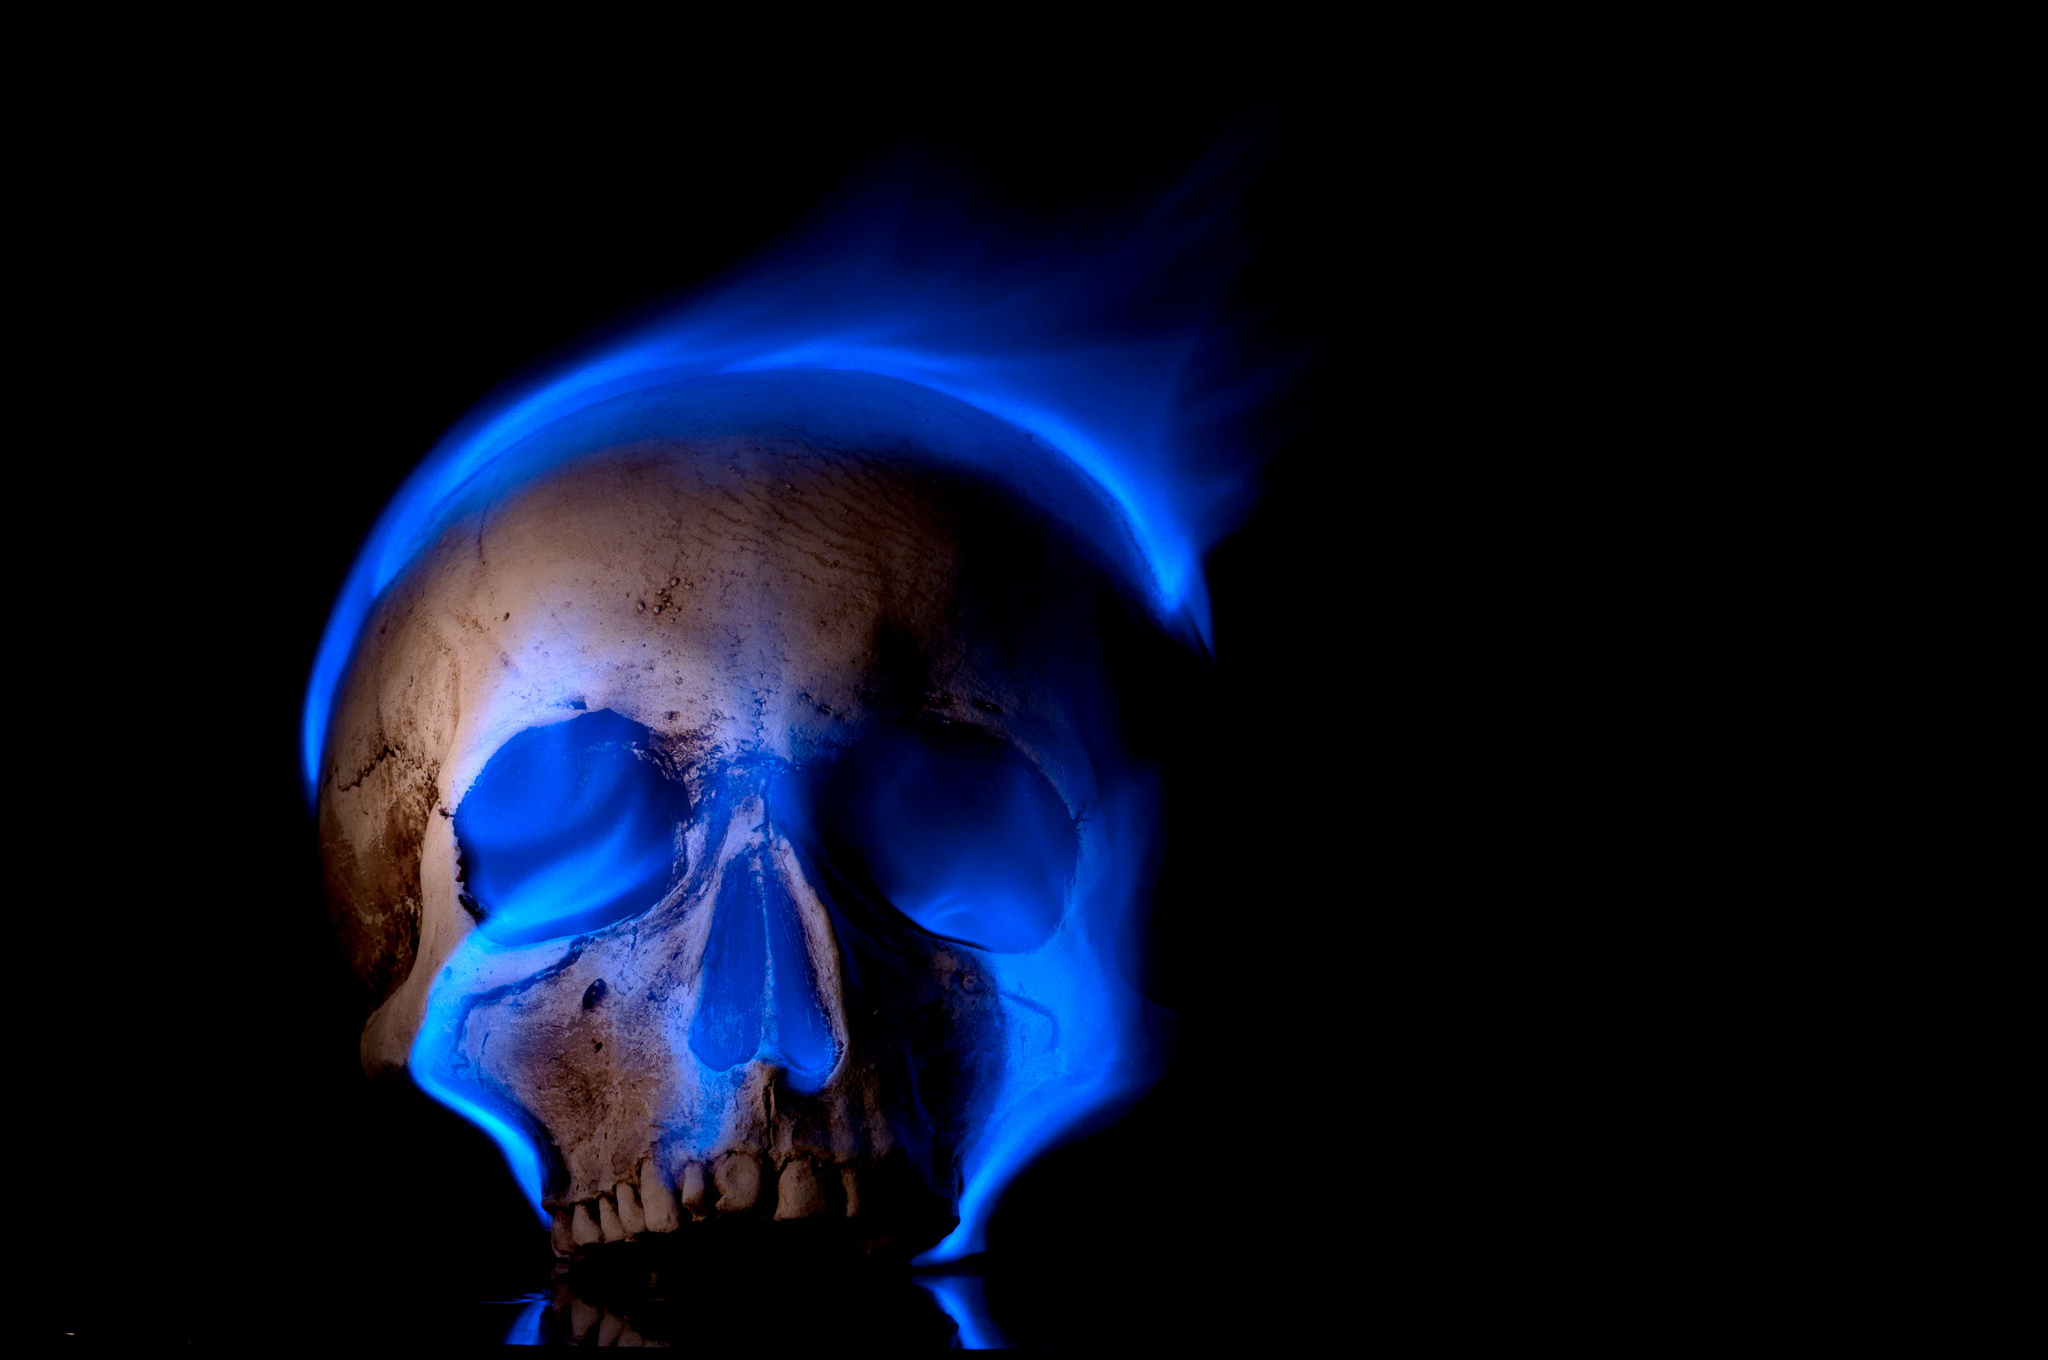 Wallpaper Skull Flame Background Miscellanea